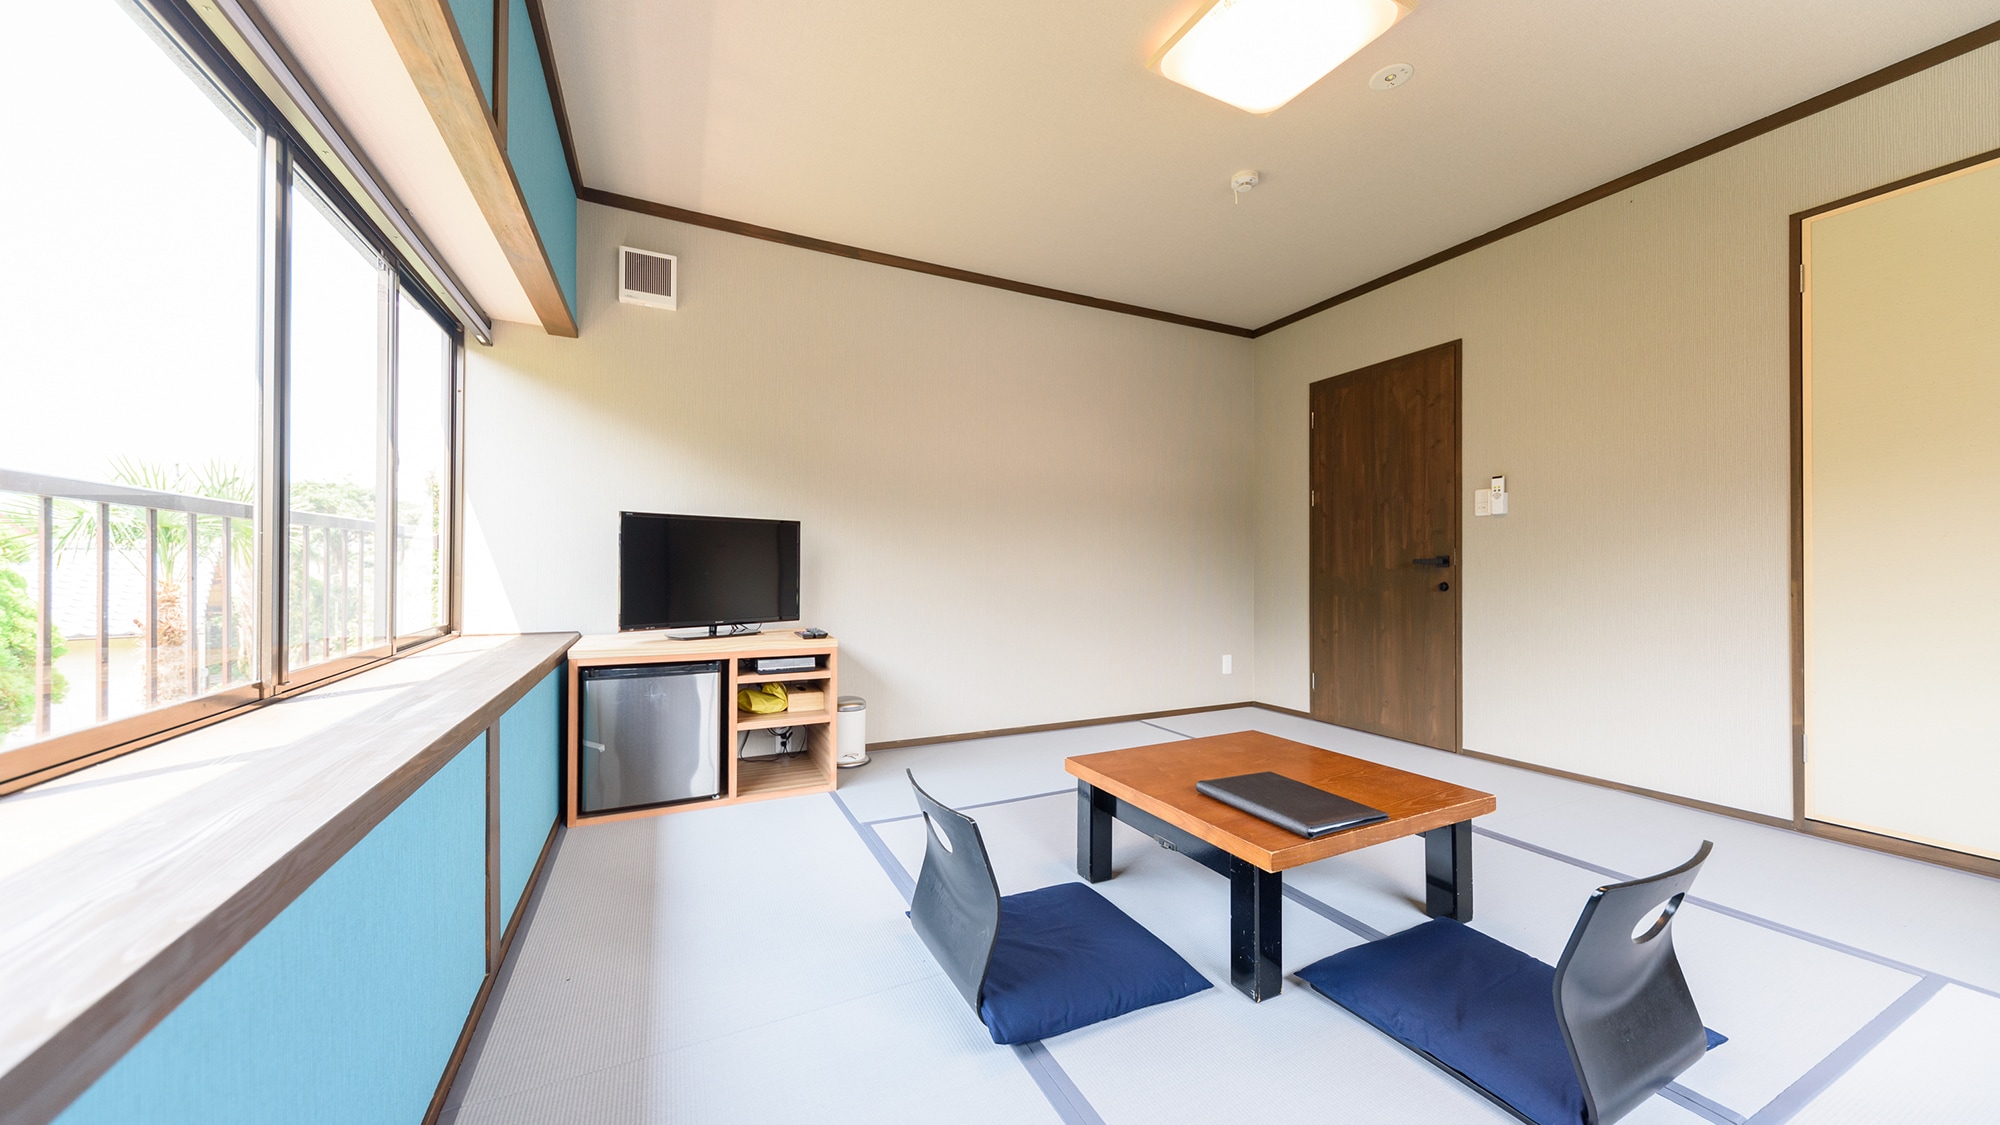 Annex 2nd floor: Japanese-style room 8 tatami mats, shared toilet [water hanada]